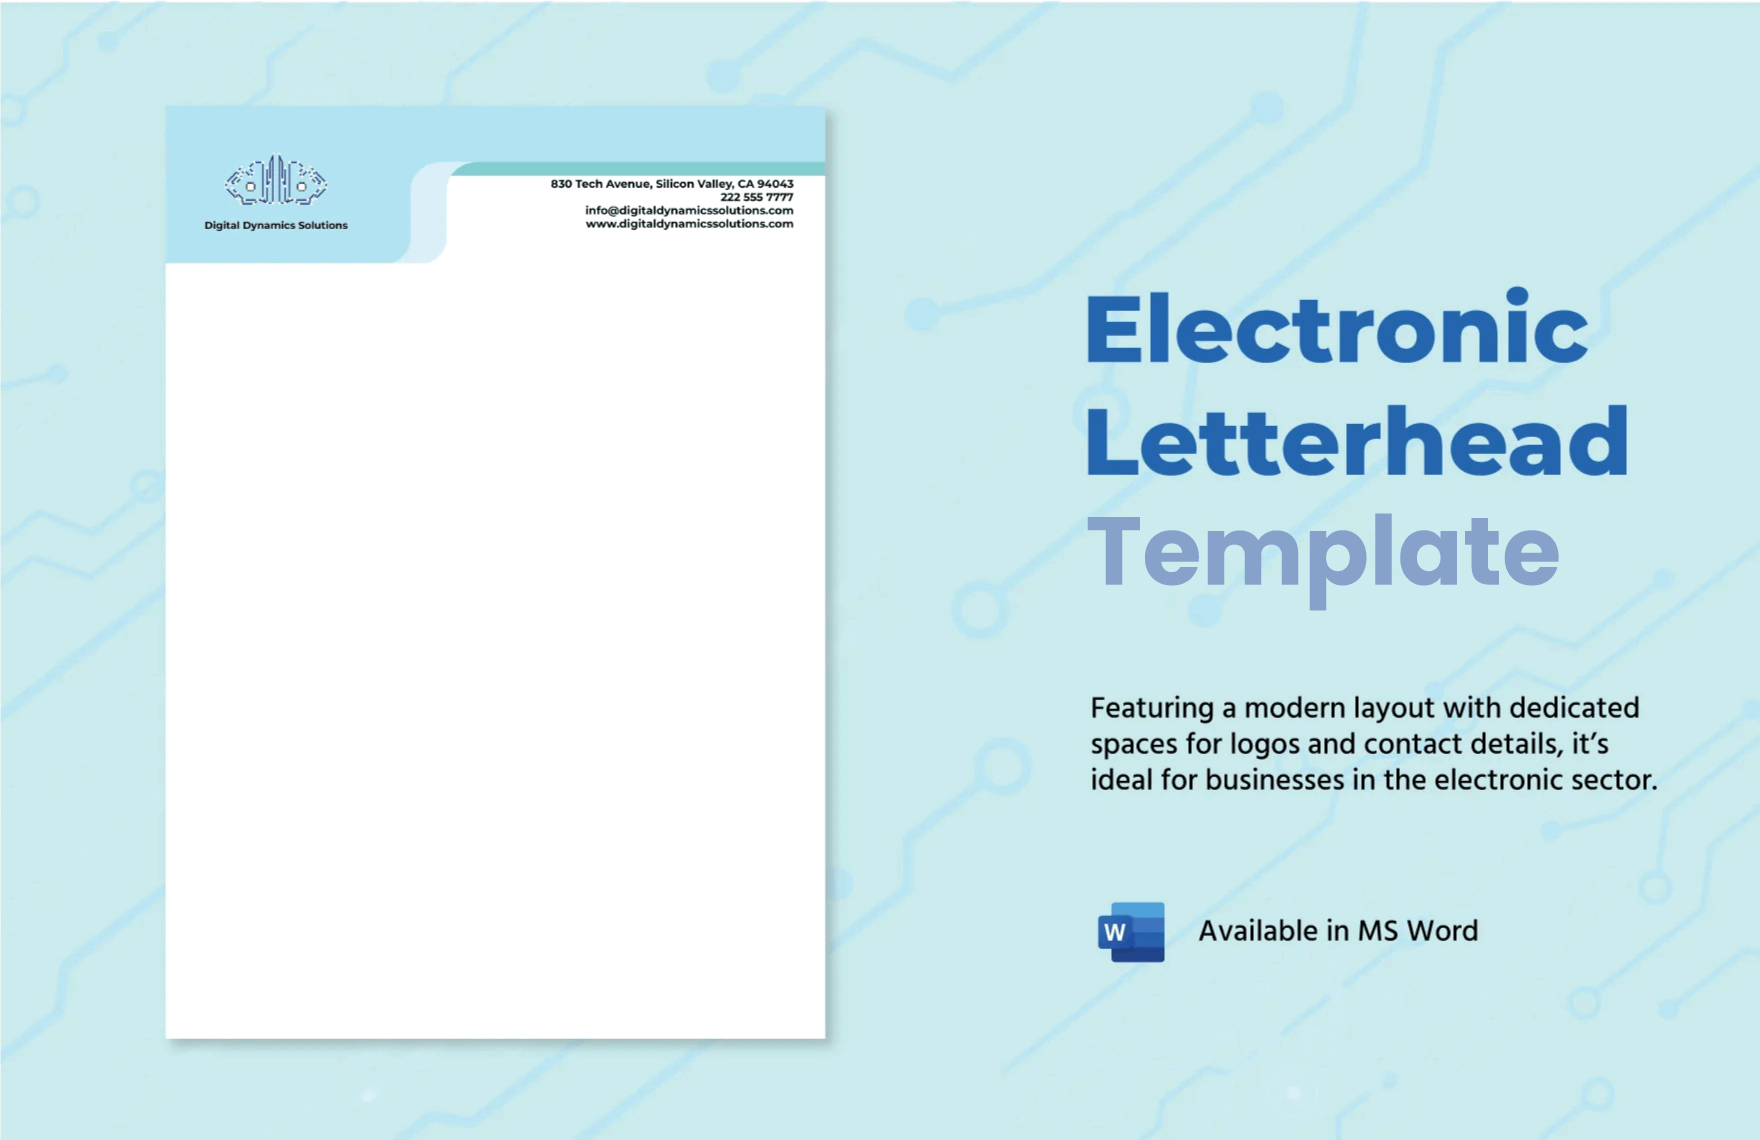 Electronic Letterhead Template in Word